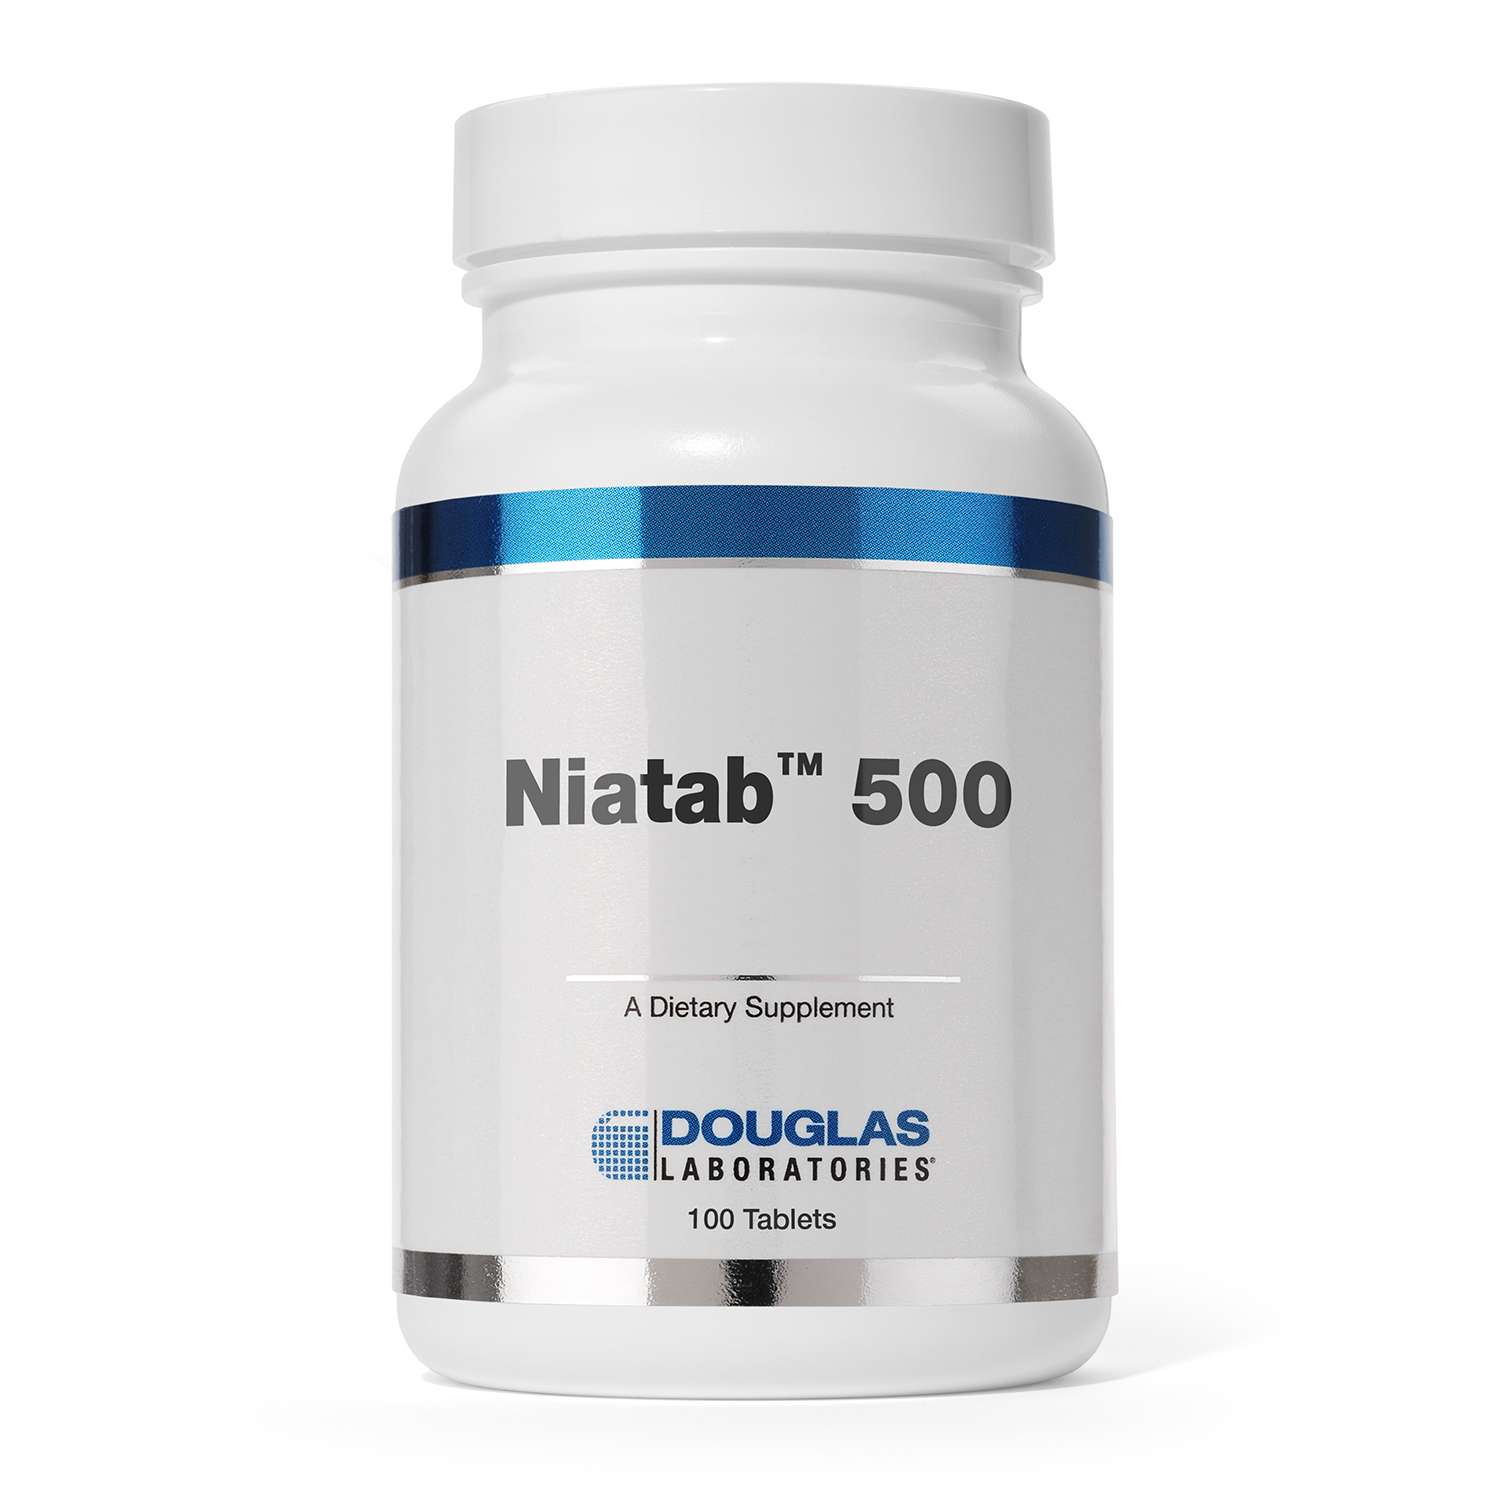 Douglas Laboratories - Niatab 500